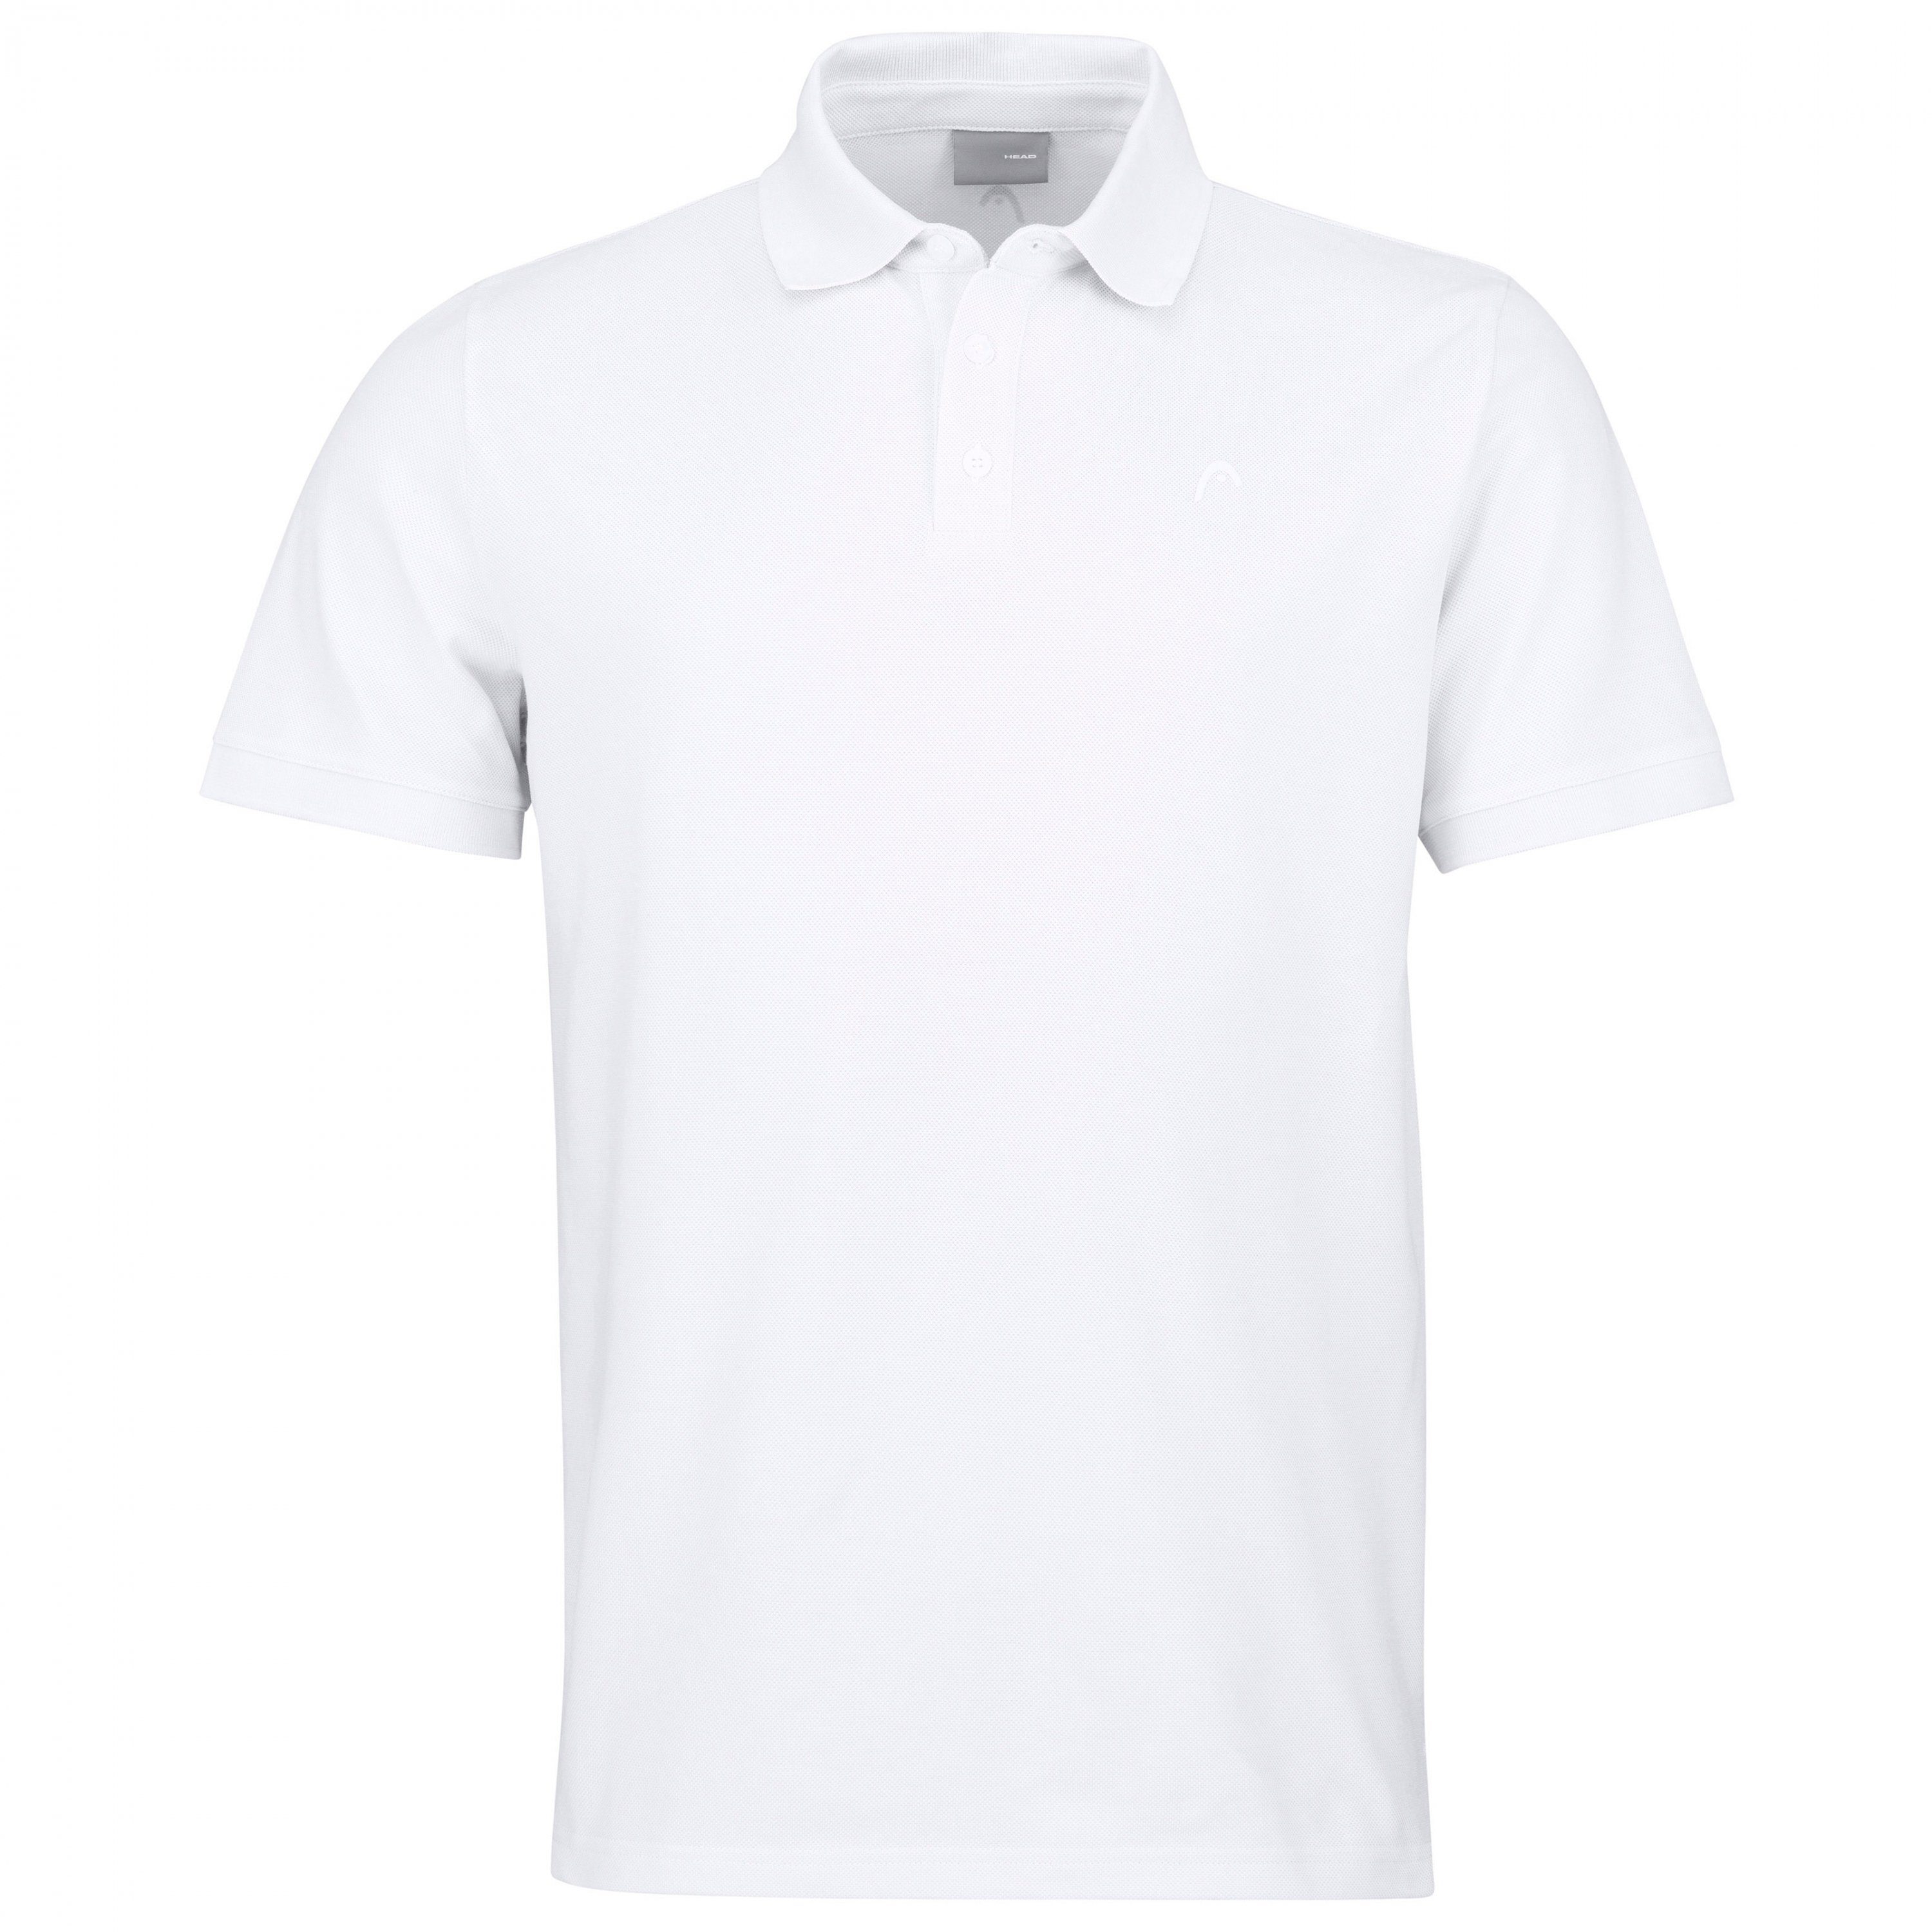 WH Tennisshirt Head Shirt Head white Herren Polo